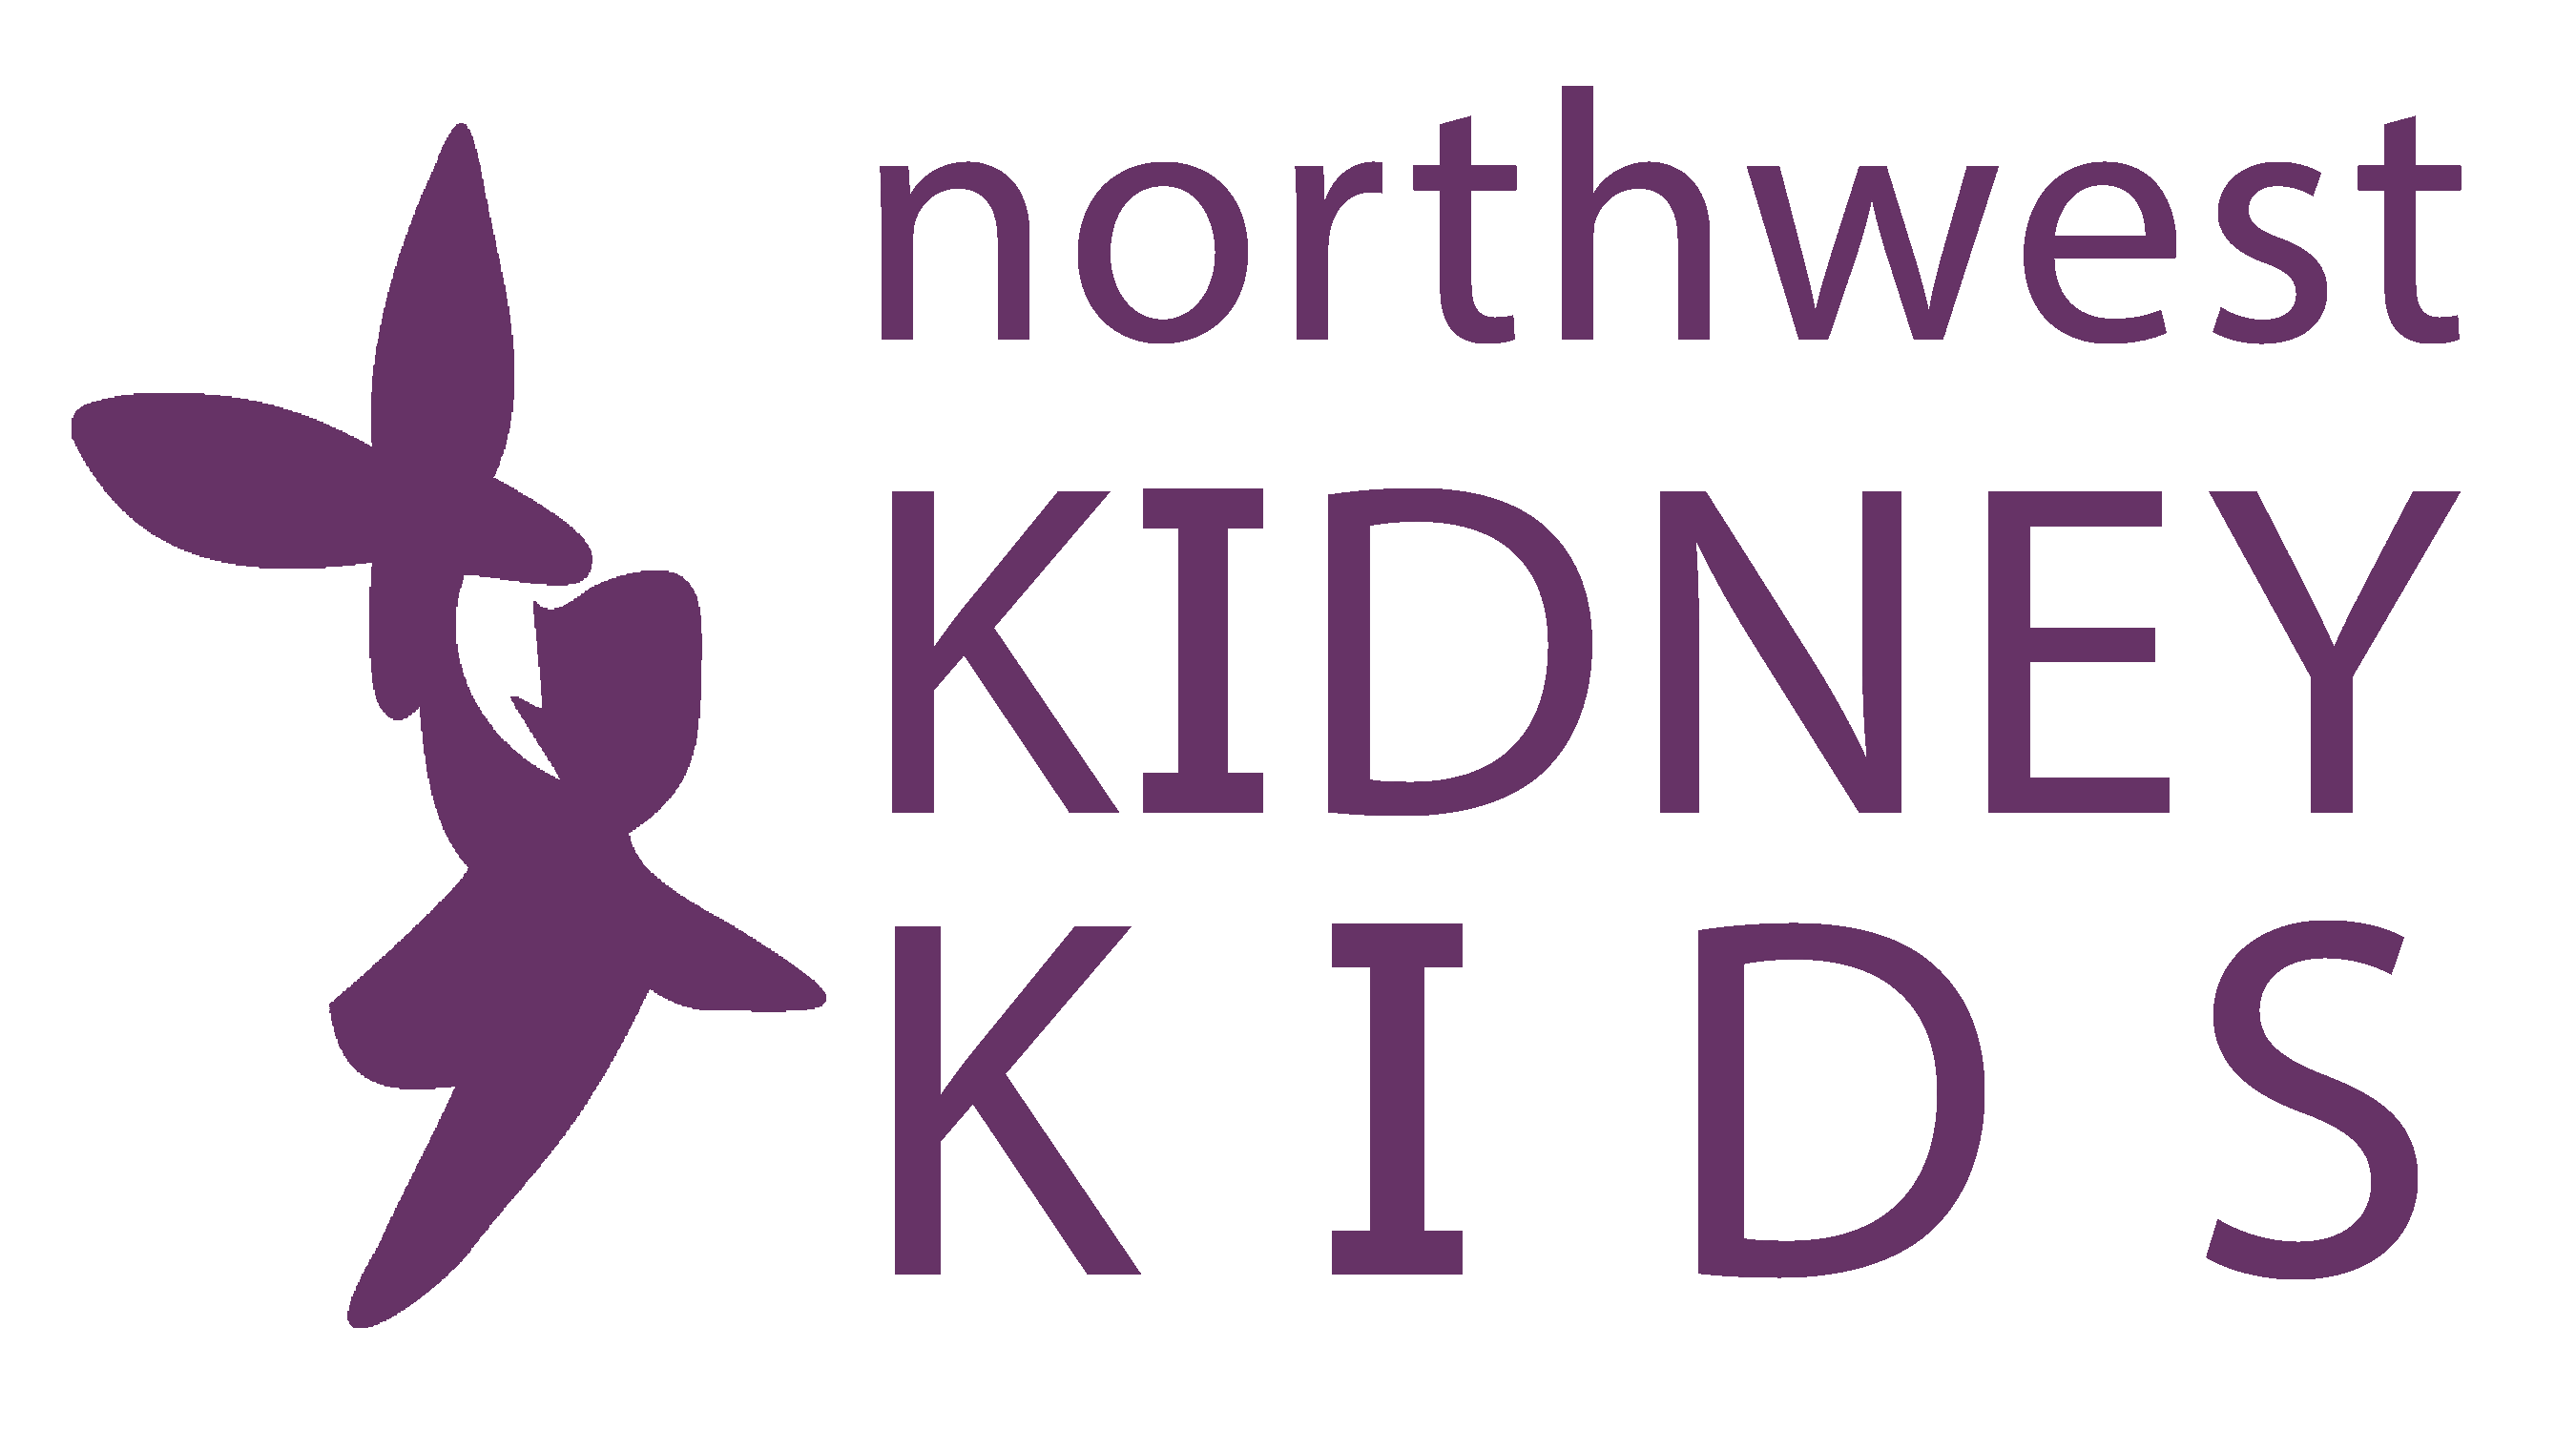 Northwest Kidney Kids logo